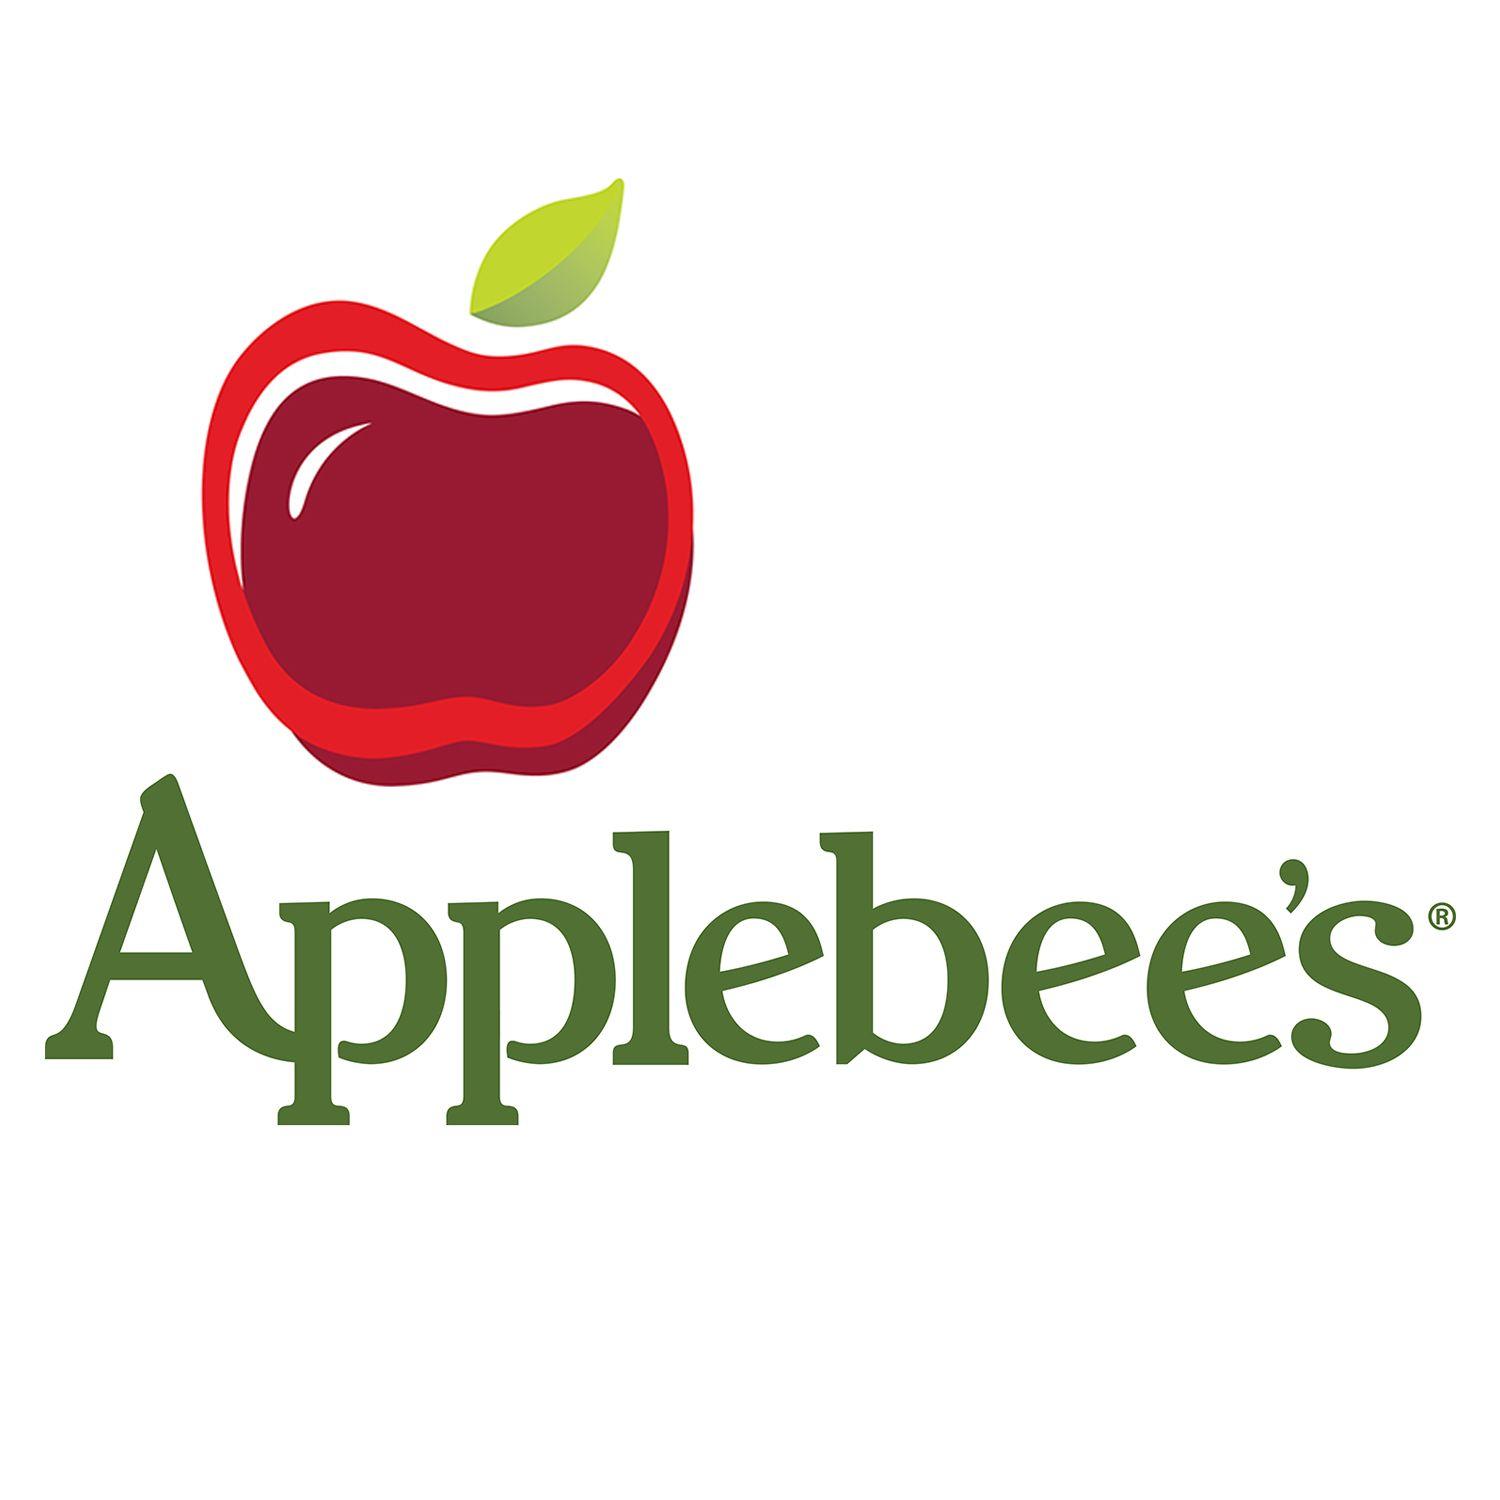 Applebee's Apple Logo - Applebee's Worker Files Wage and Hour Class Action in CA